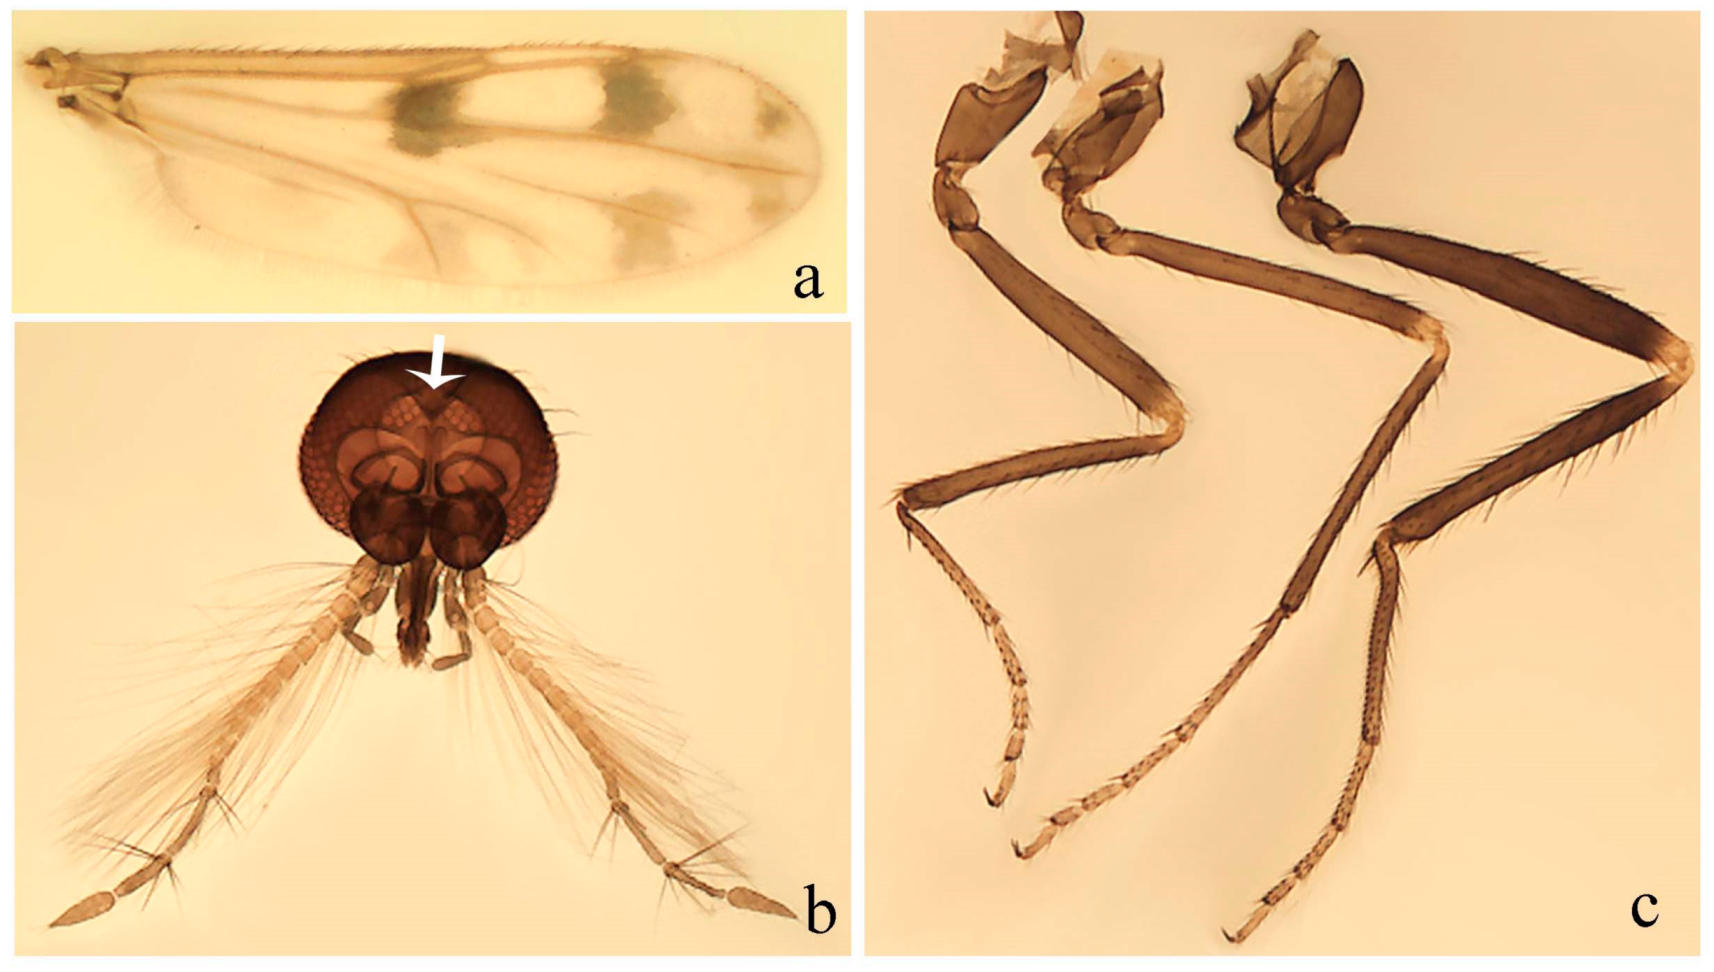 Amblypigid female carrying pupae of Pseudogaurax (Diptera